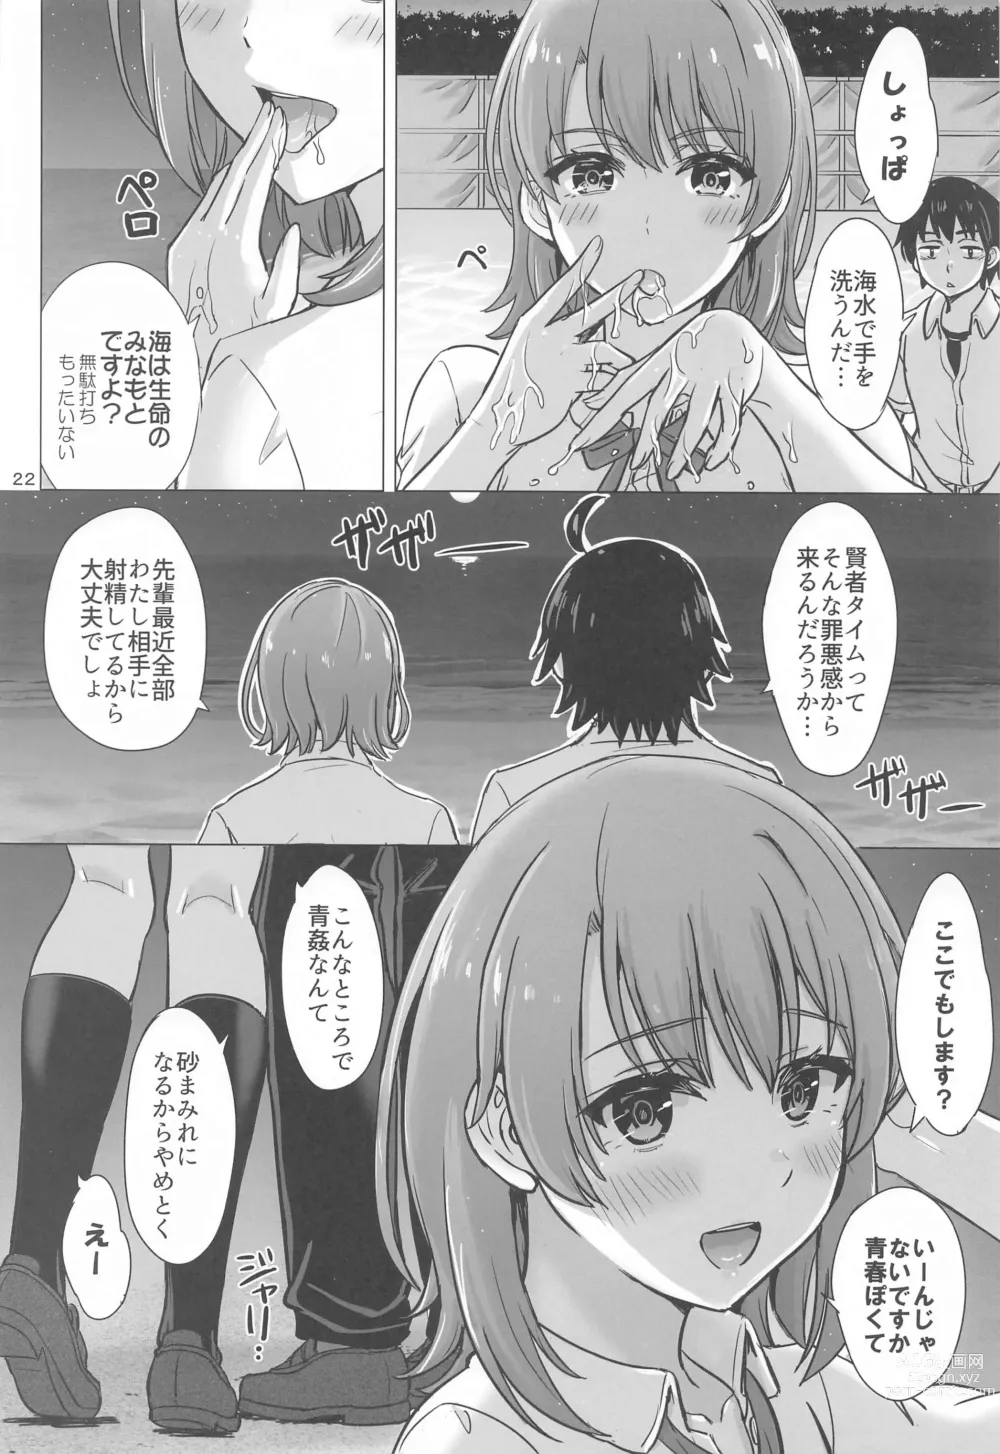 Page 21 of doujinshi Isshiki Iroha no Iyarashii Natsuyasumi. - Irohas days of summer are many sex next year.